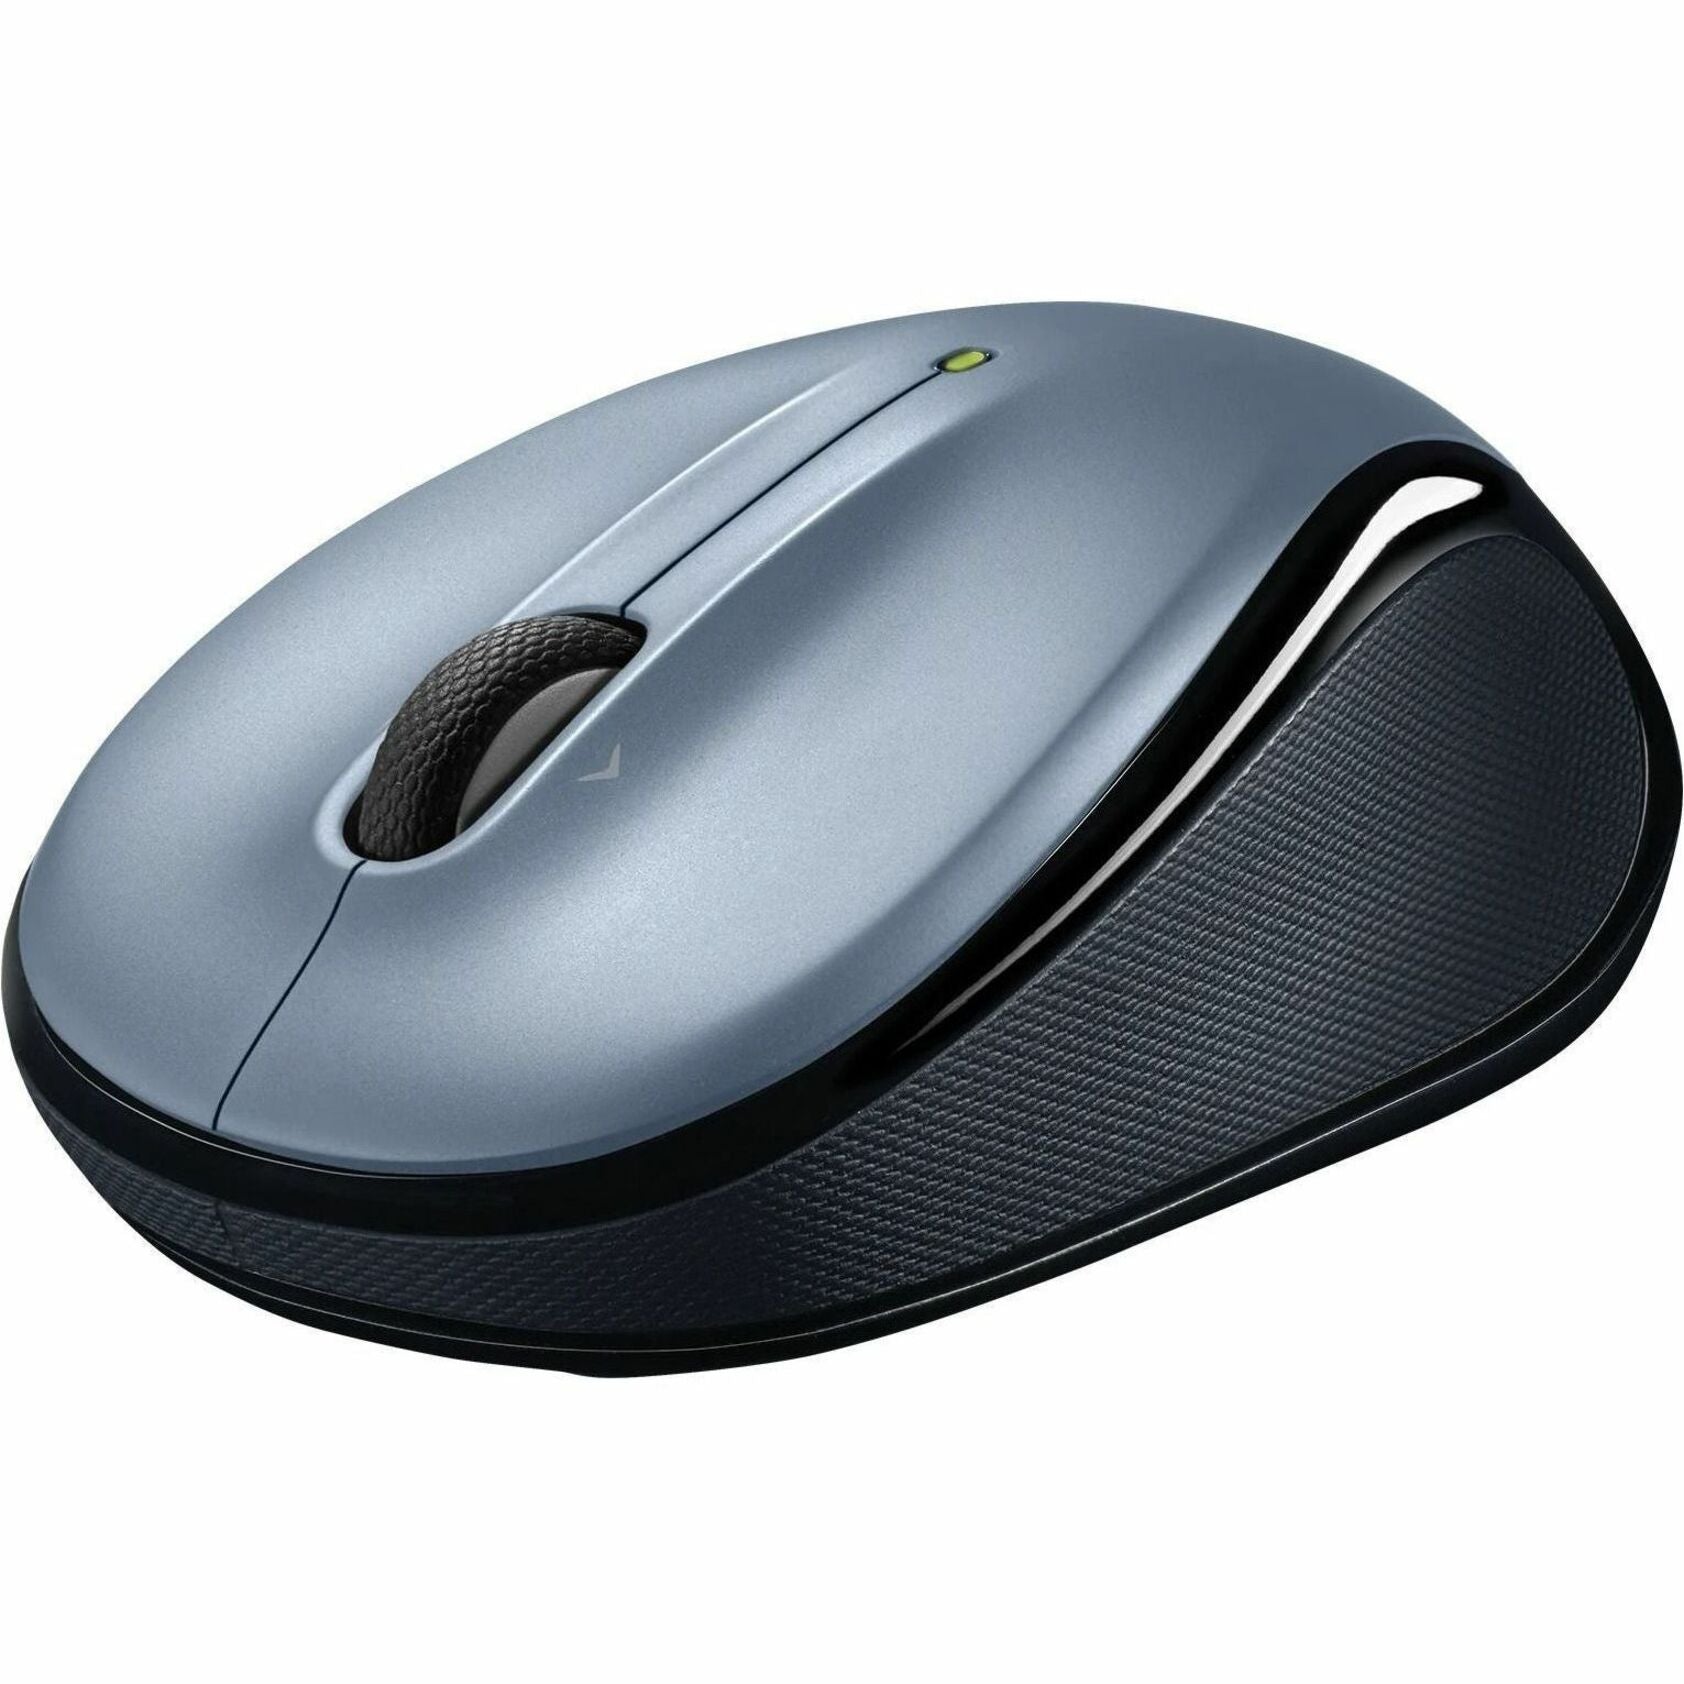 Logitech 910-006823 M325s Wireless Mouse, Small Size, 1000 dpi, Dark Silver